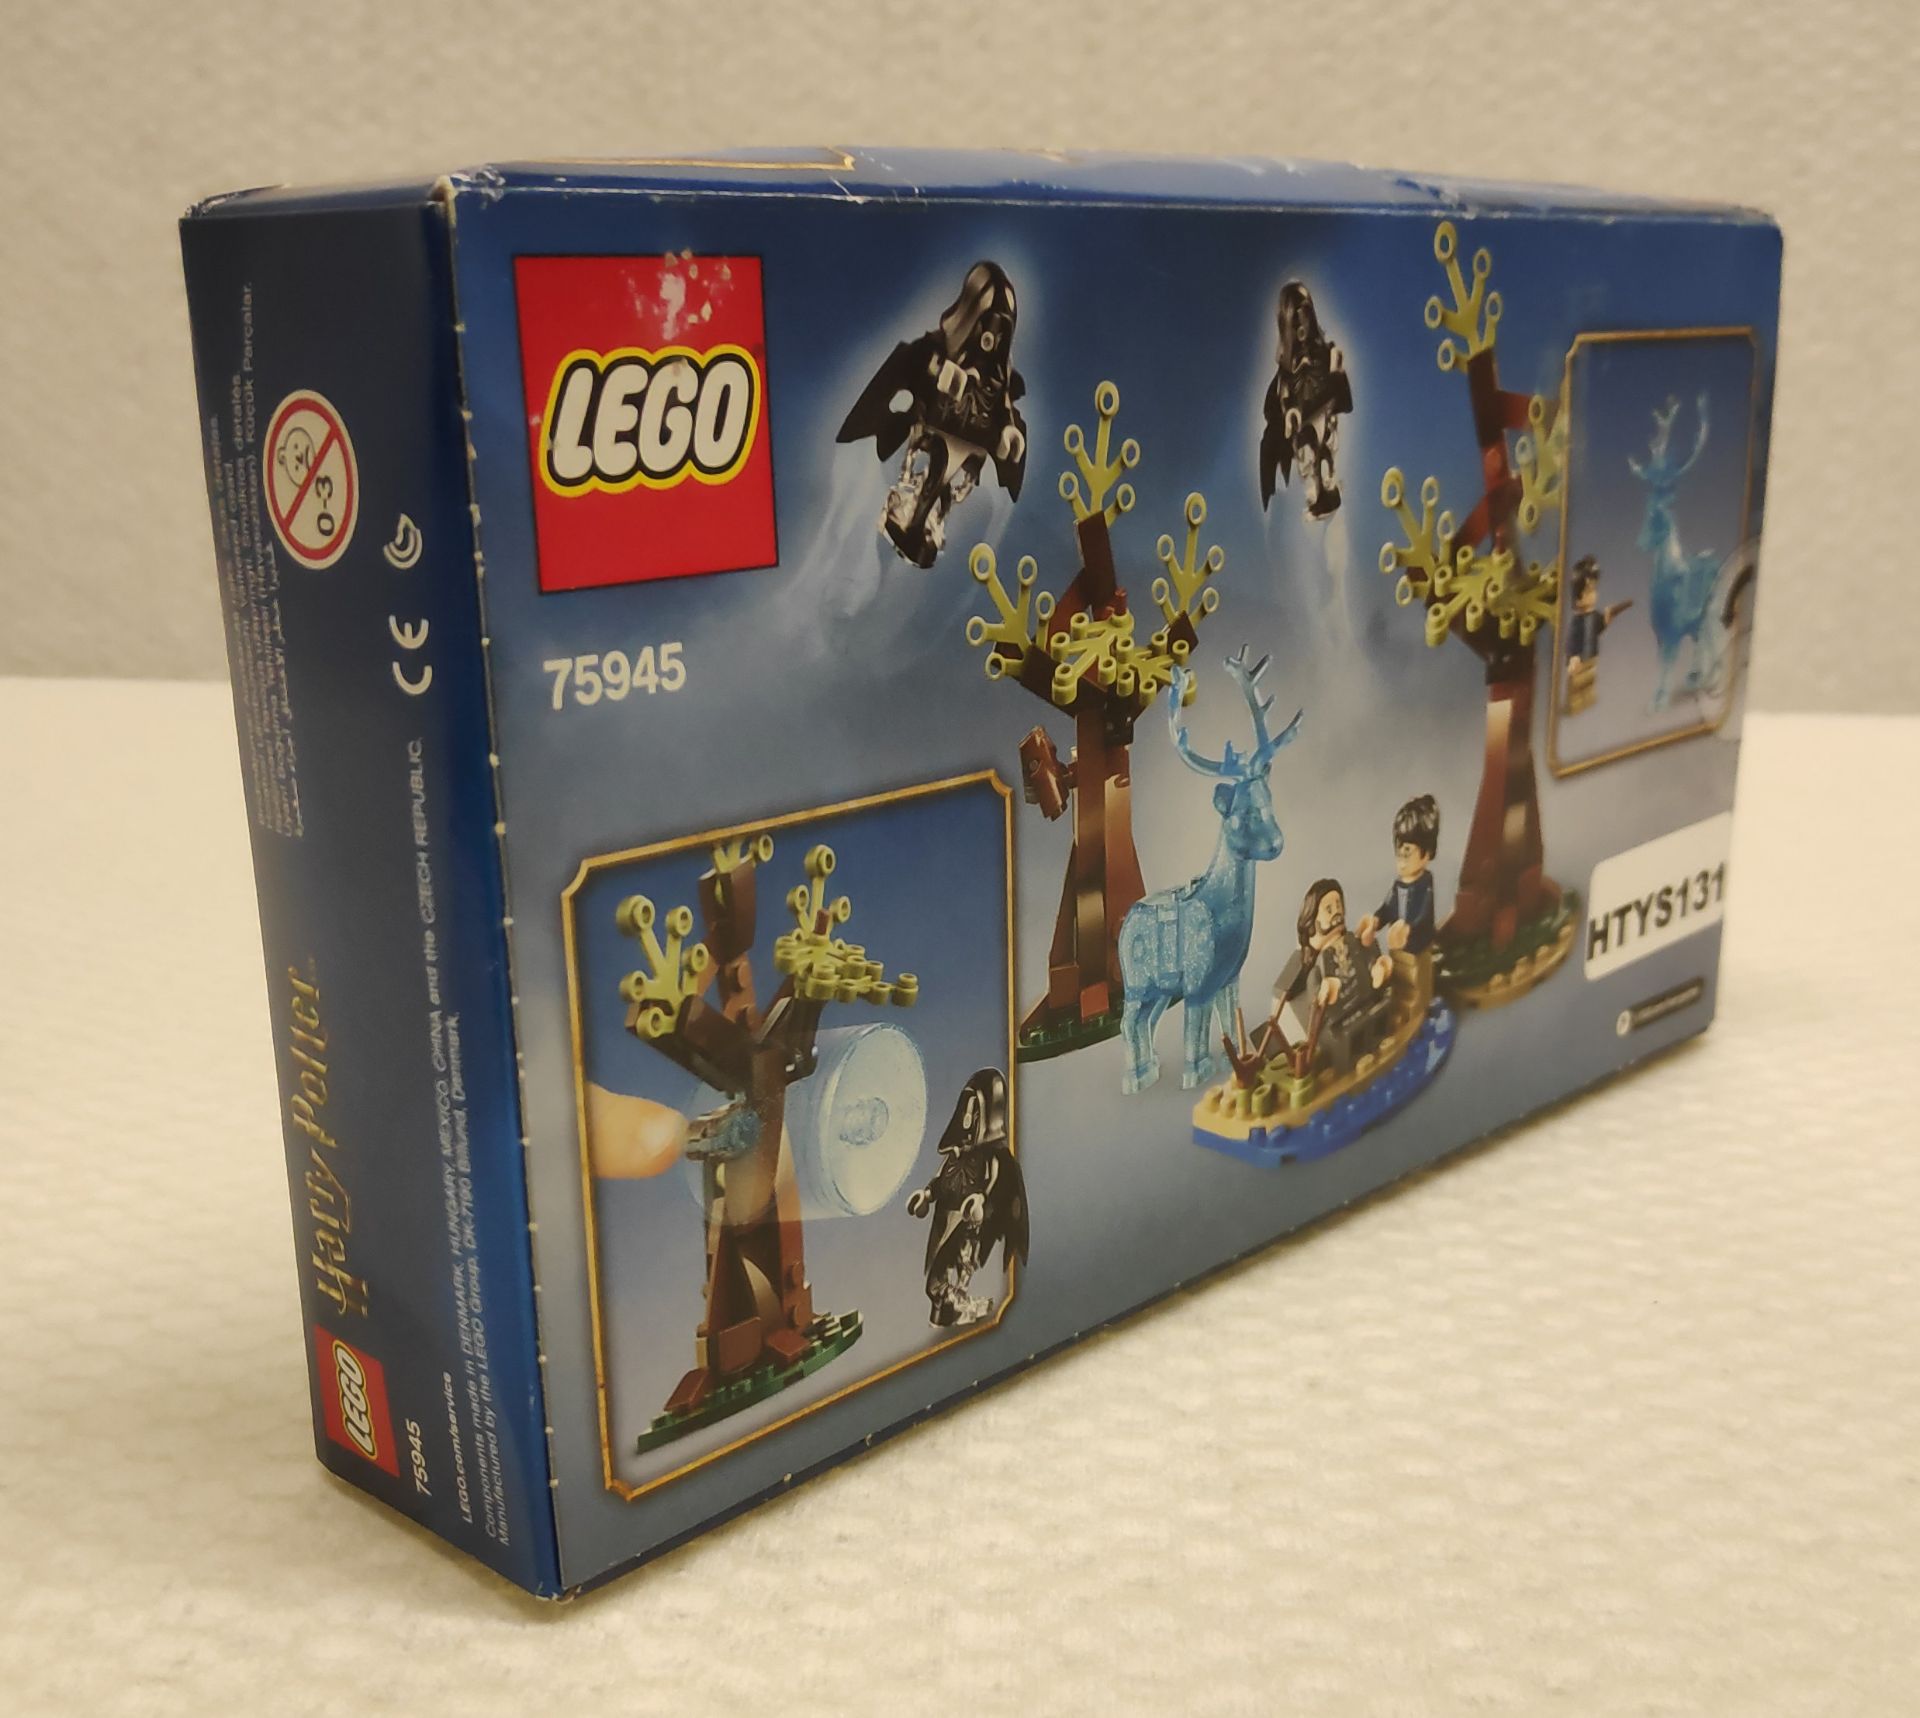 1 x Lego Harry Potter Expecto Patronum Set - New/Boxed - Set # 75945 - Image 3 of 10